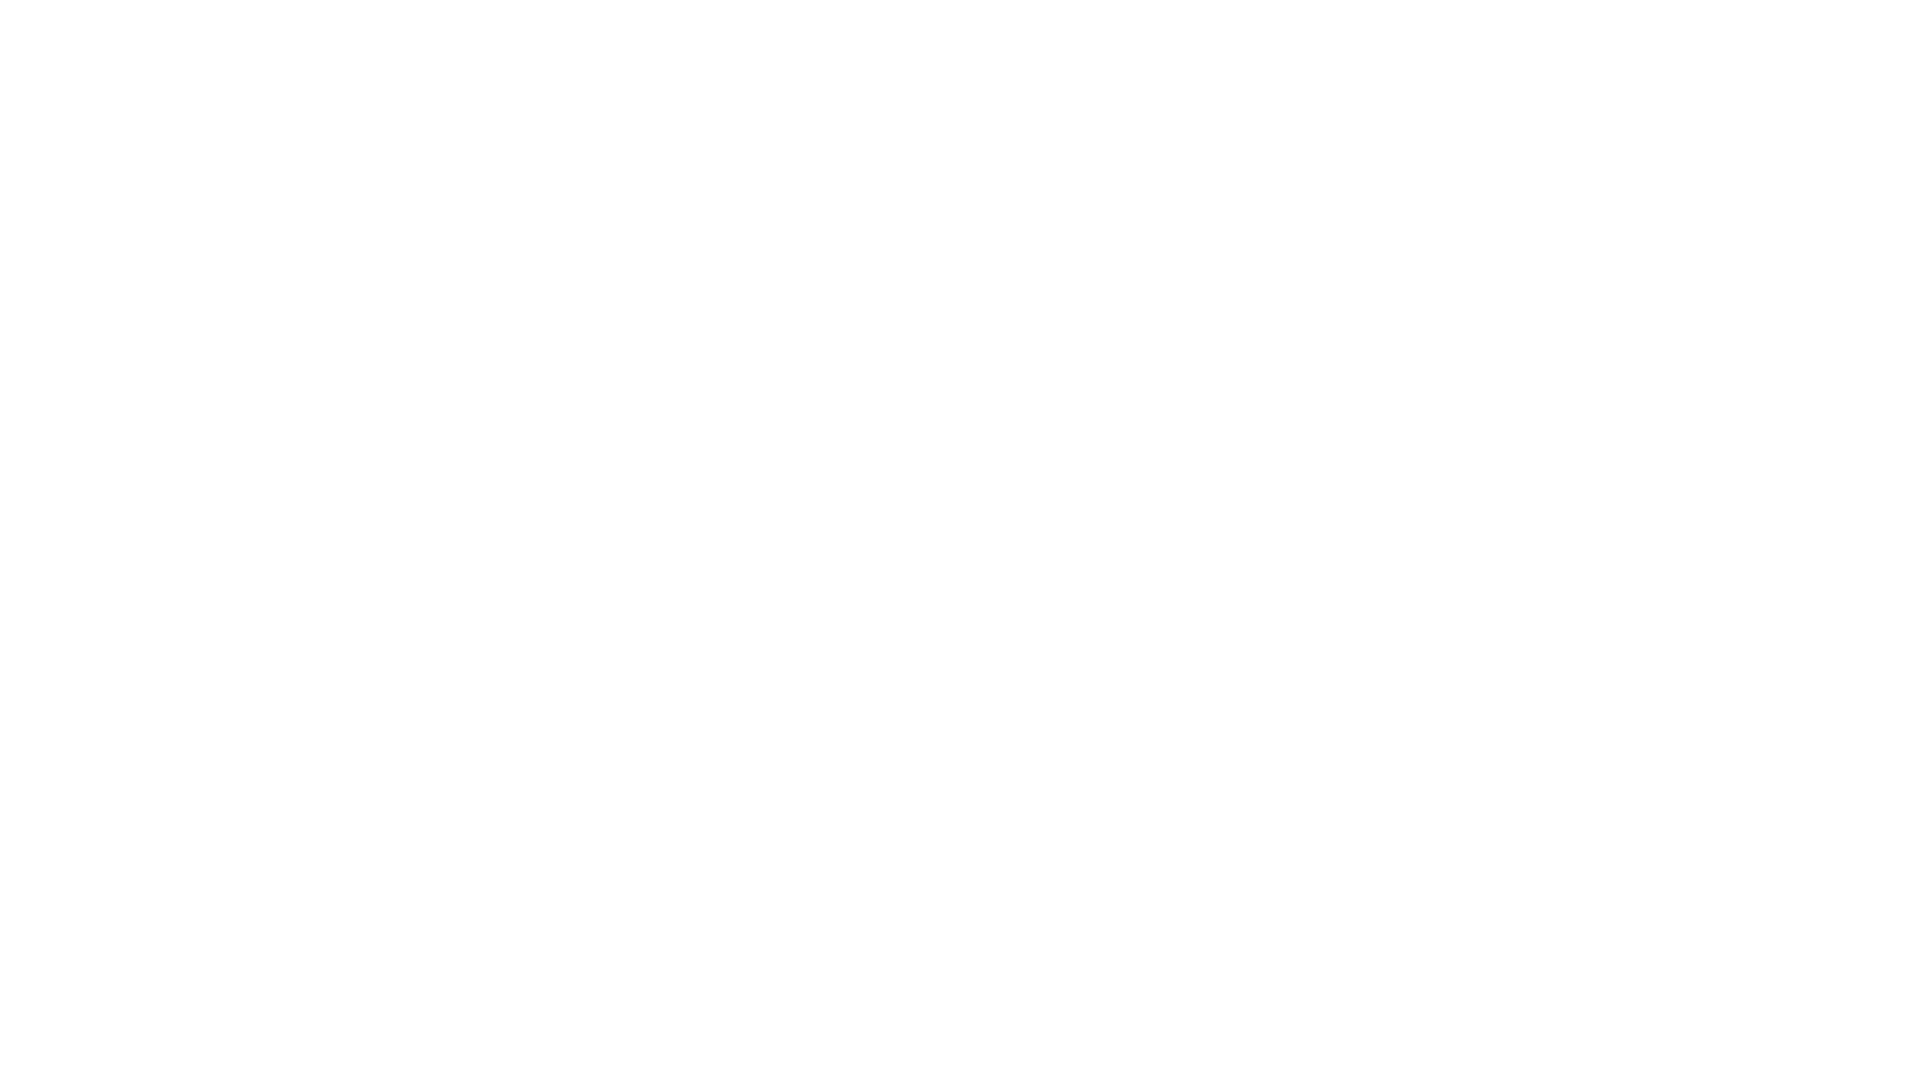 CanzellRealtyTall1080pWhiteTransparent